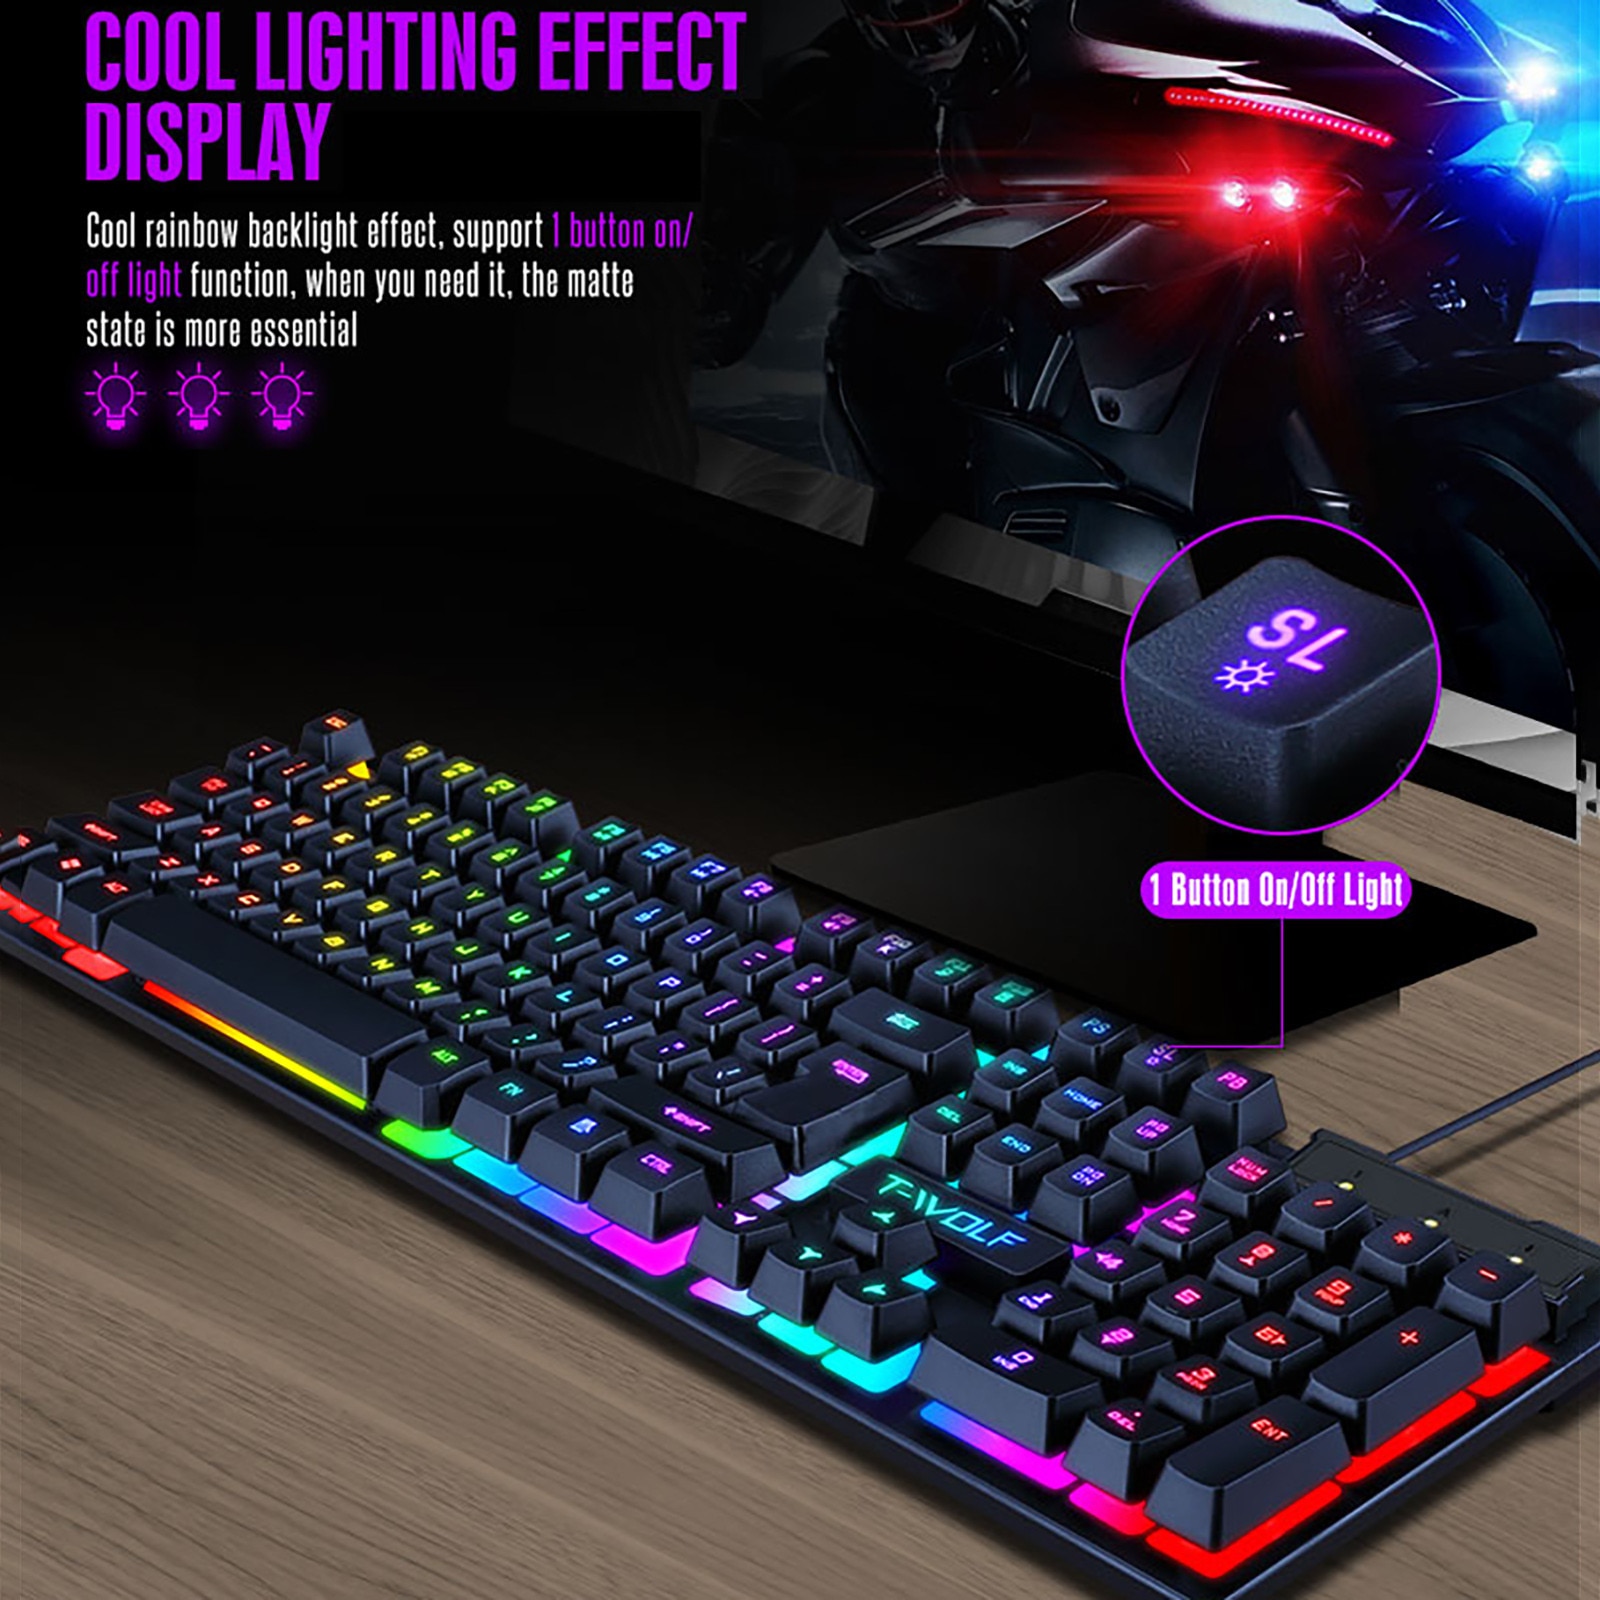 Mechanical gaming keyboard TF200 Rainbow Backlight Usb ergonomic gaming keyboard, suitable for PC laptop gaming